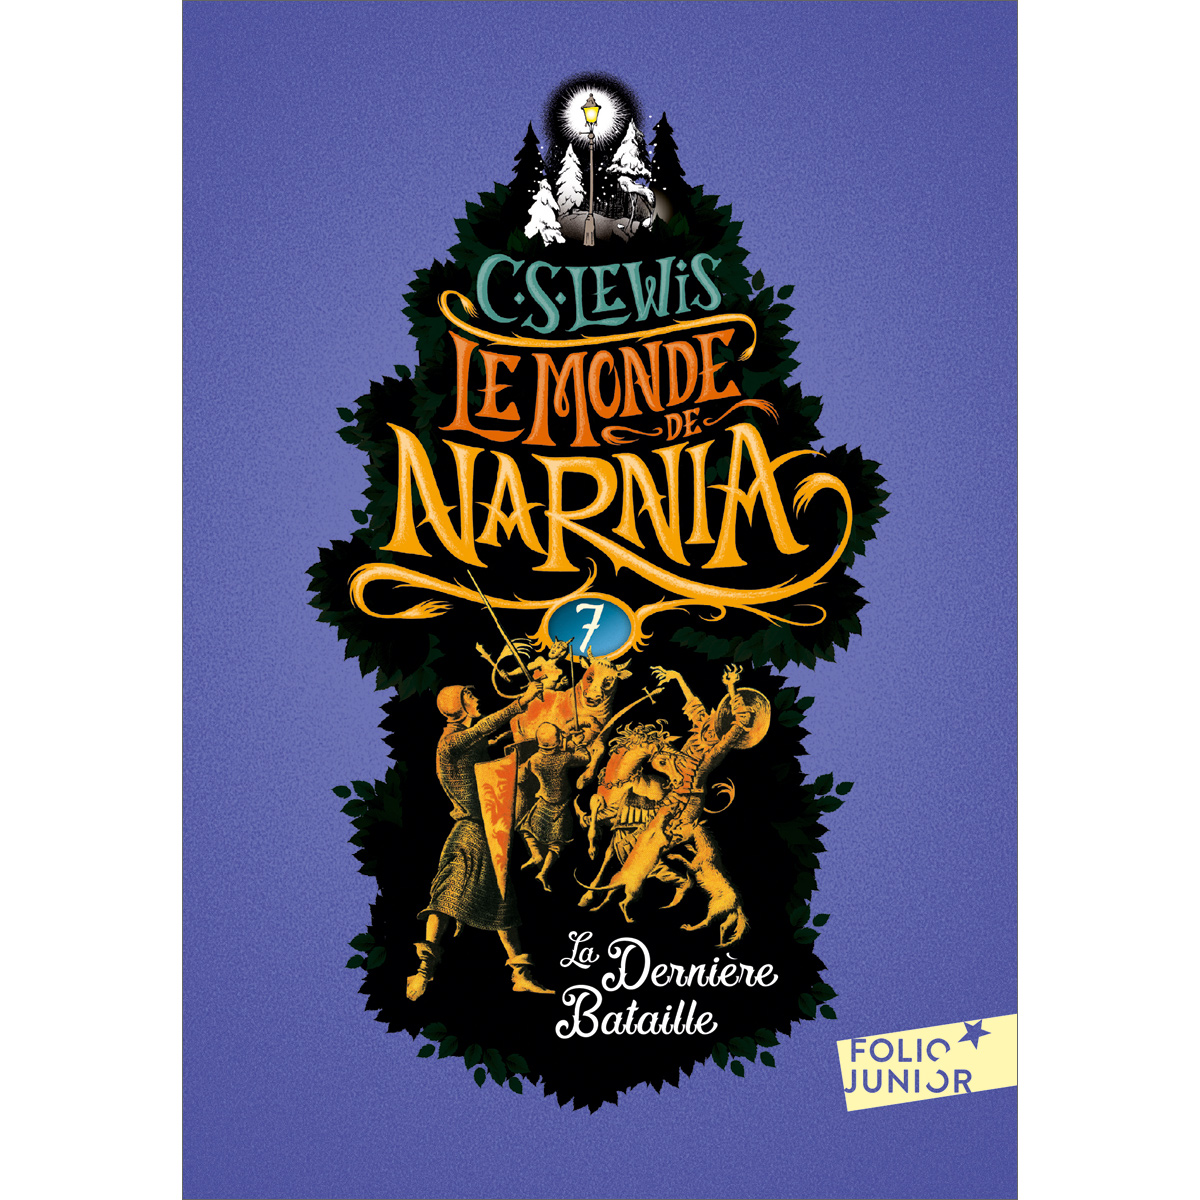 Le Monde de Narnia (7) - La Dernire Bataille